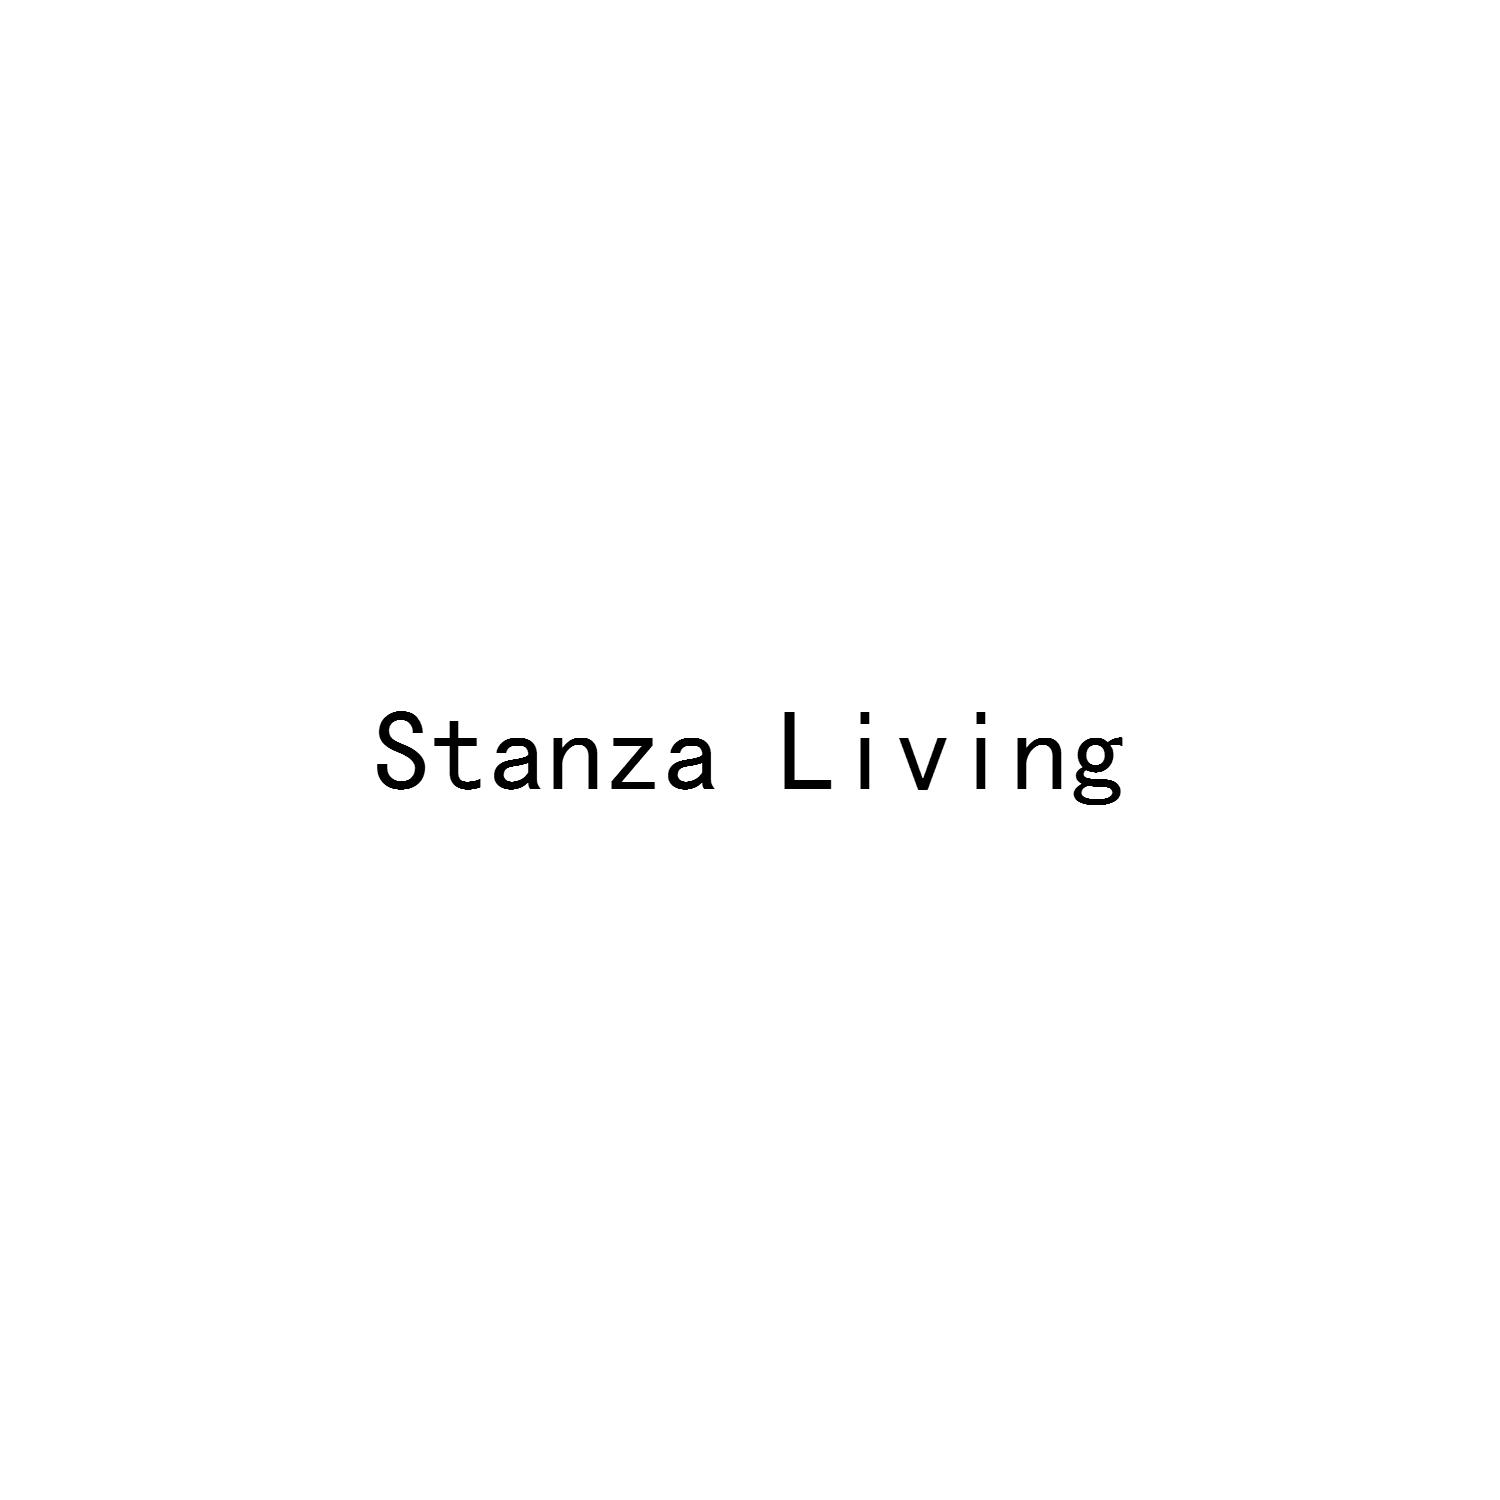 STANZA LIVING